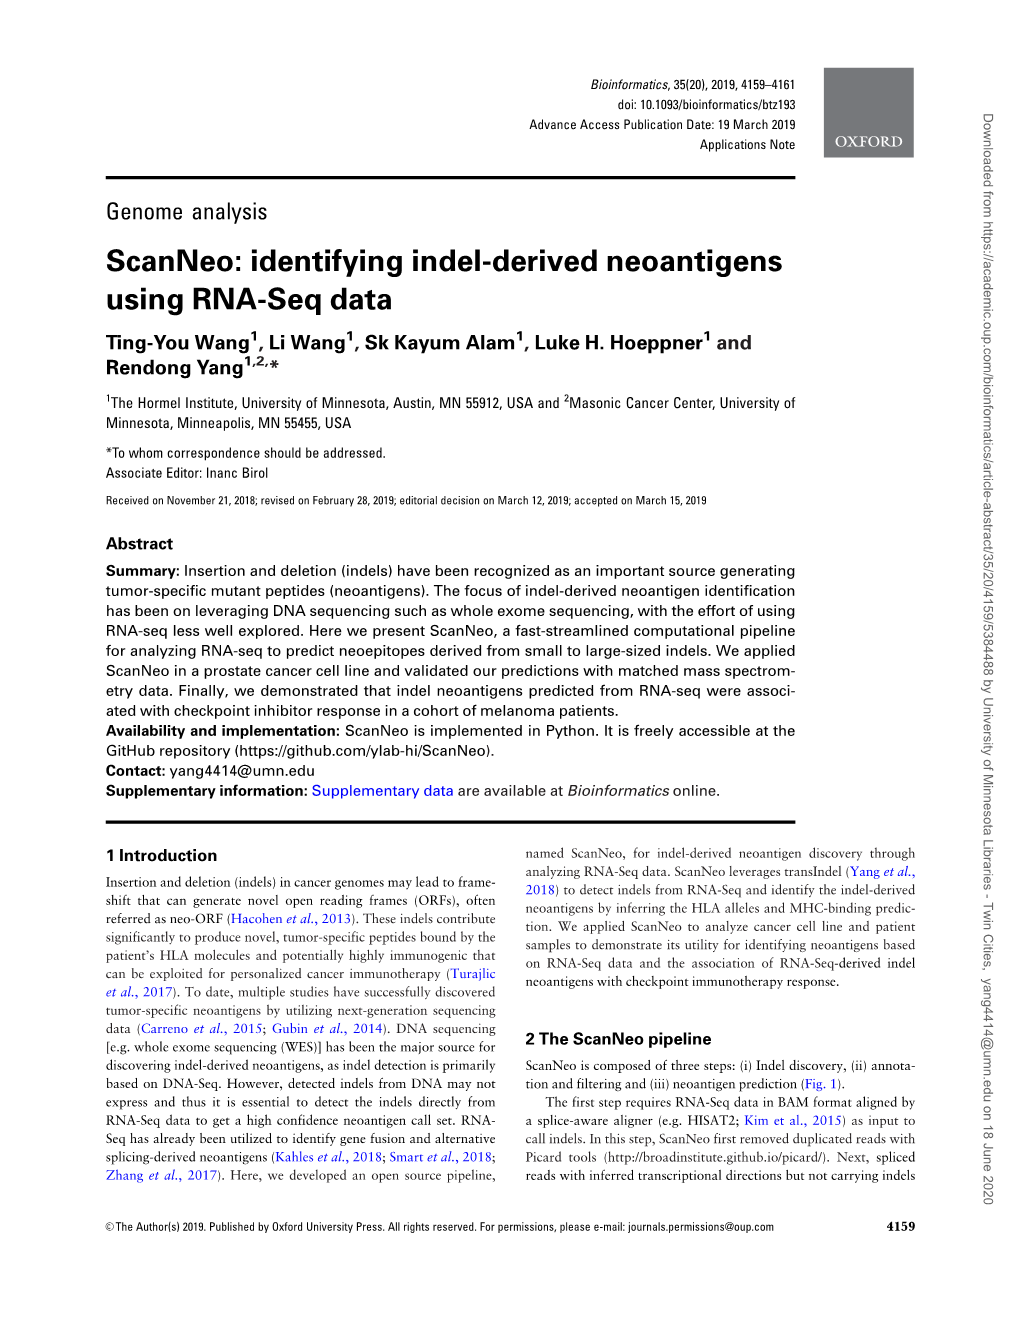 Scanneo: Identifying Indel-Derived Neoantigens Using RNA-Seq Data Ting-You Wang1, Li Wang1, Sk Kayum Alam1, Luke H